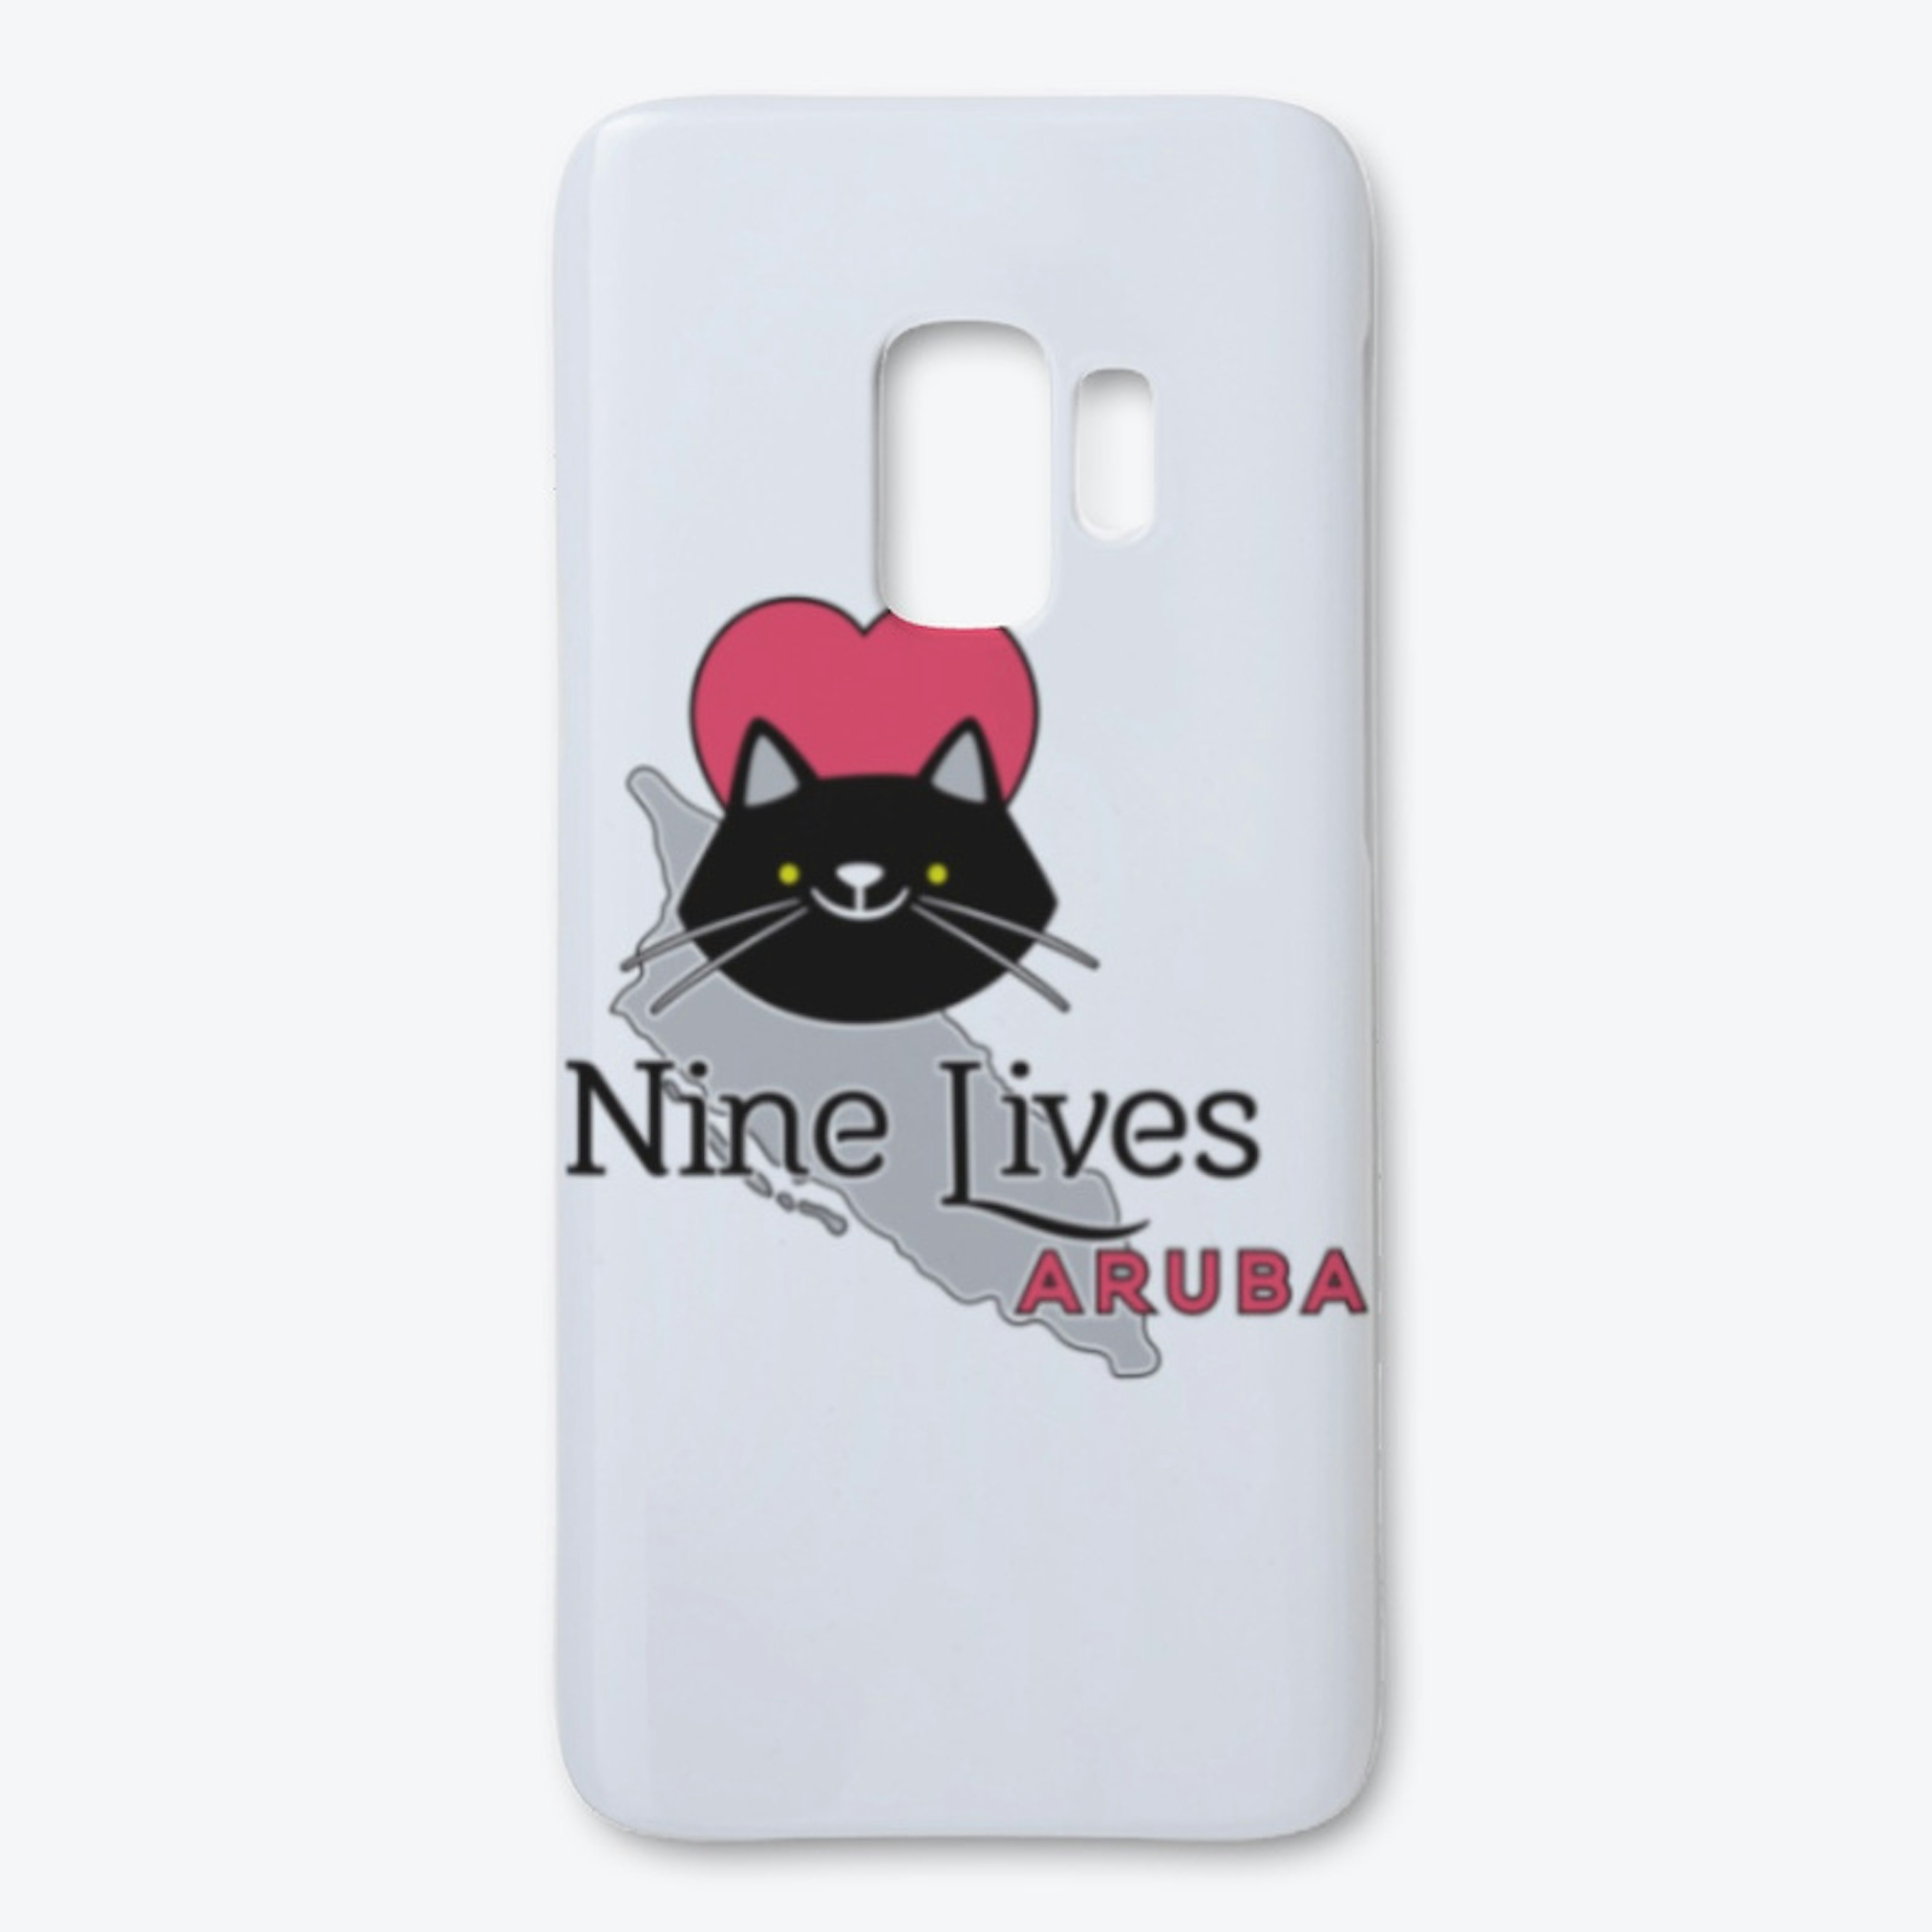 Nine Lives Aruba Merchandise 